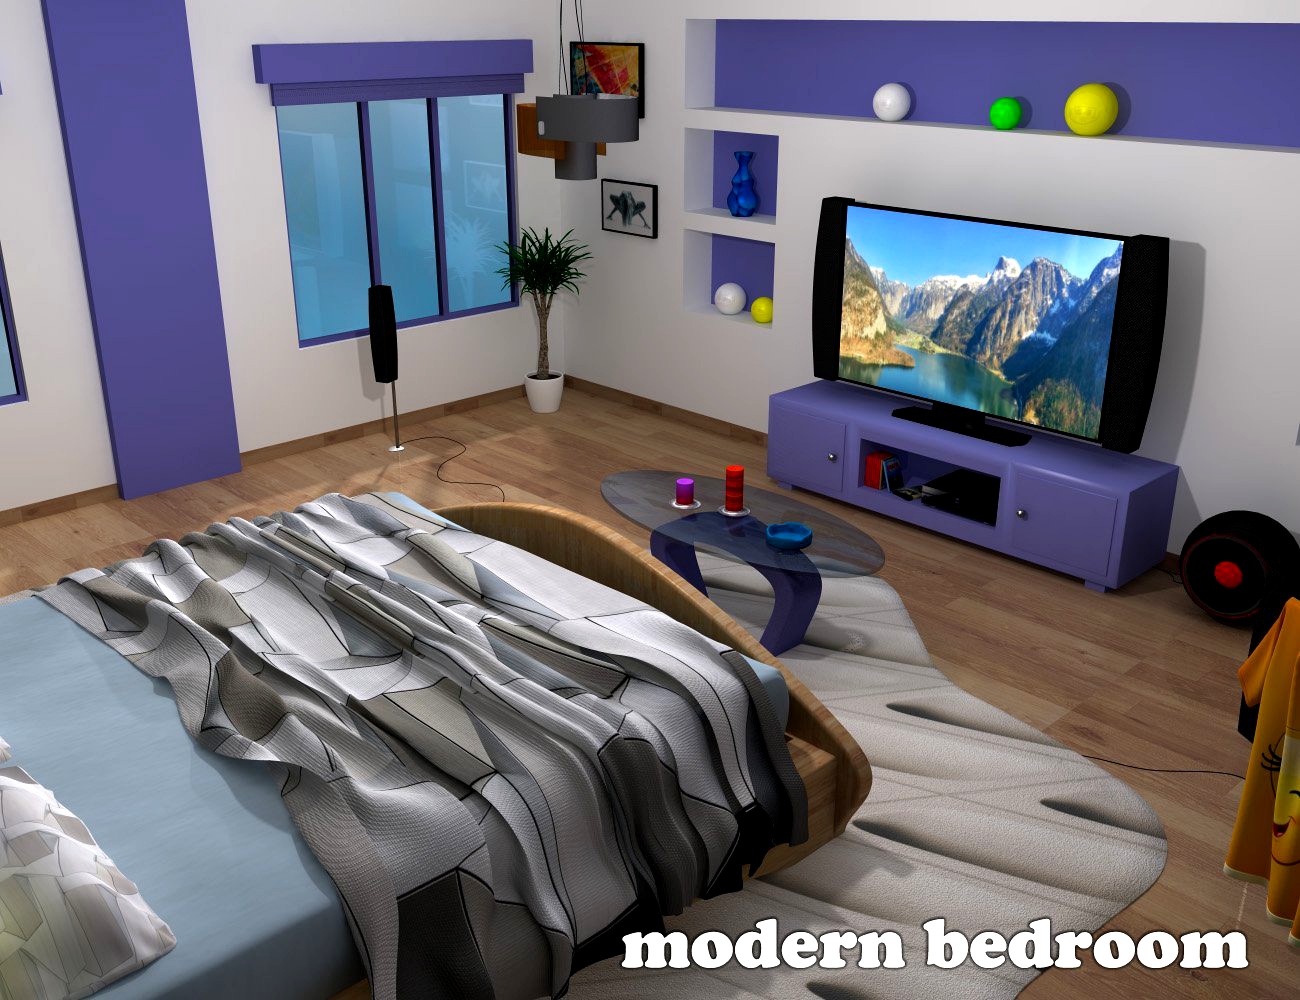 Modern Bedroom - Extended License